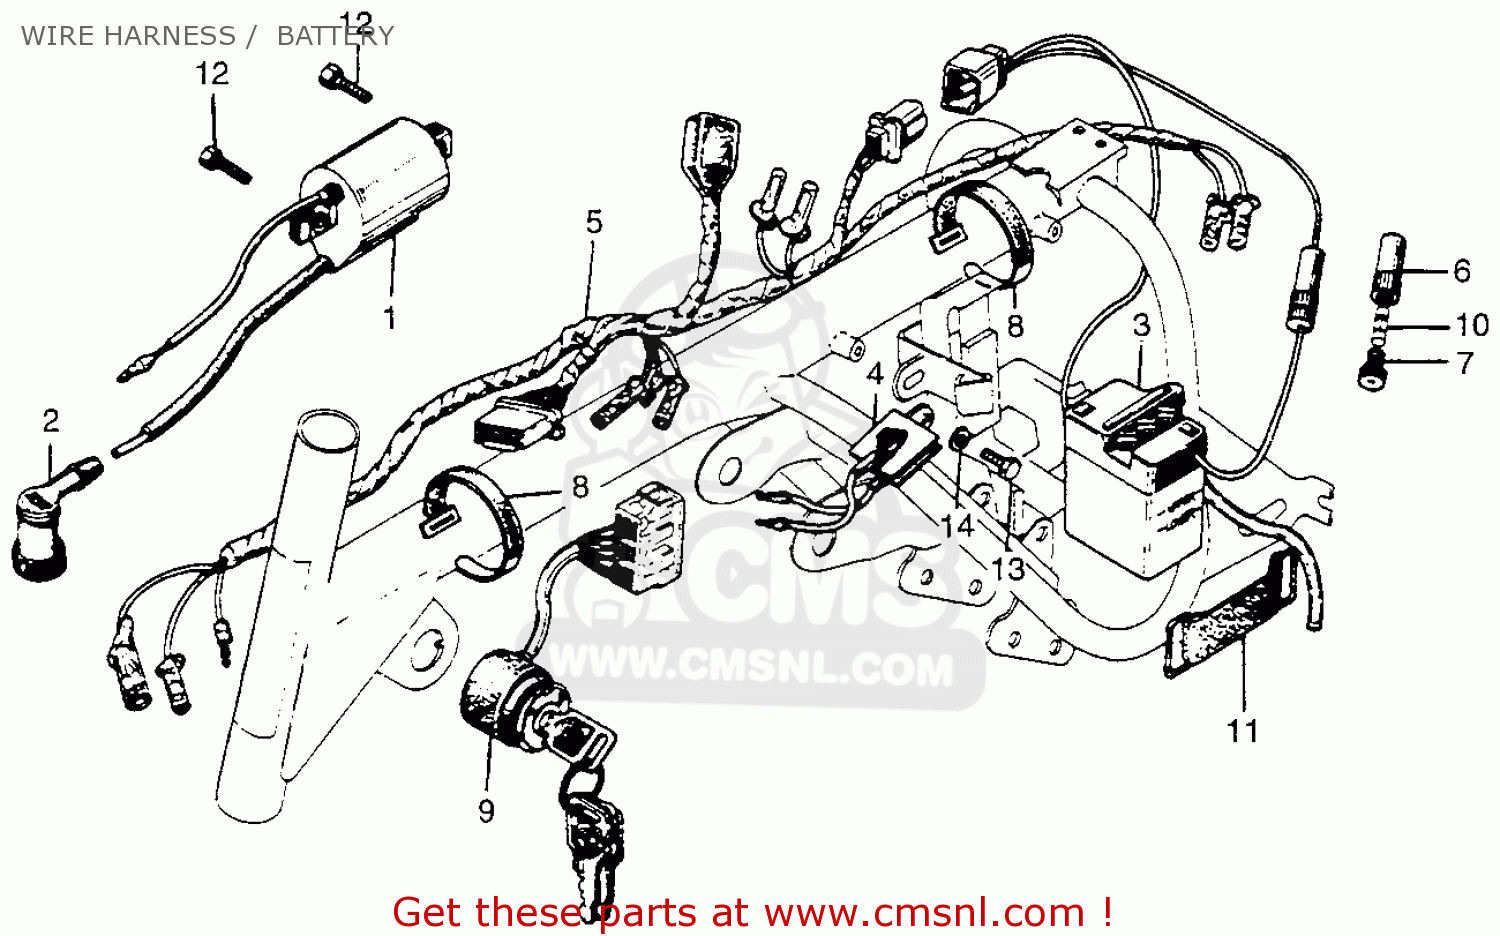 1979 Honda z50 wiring diagram